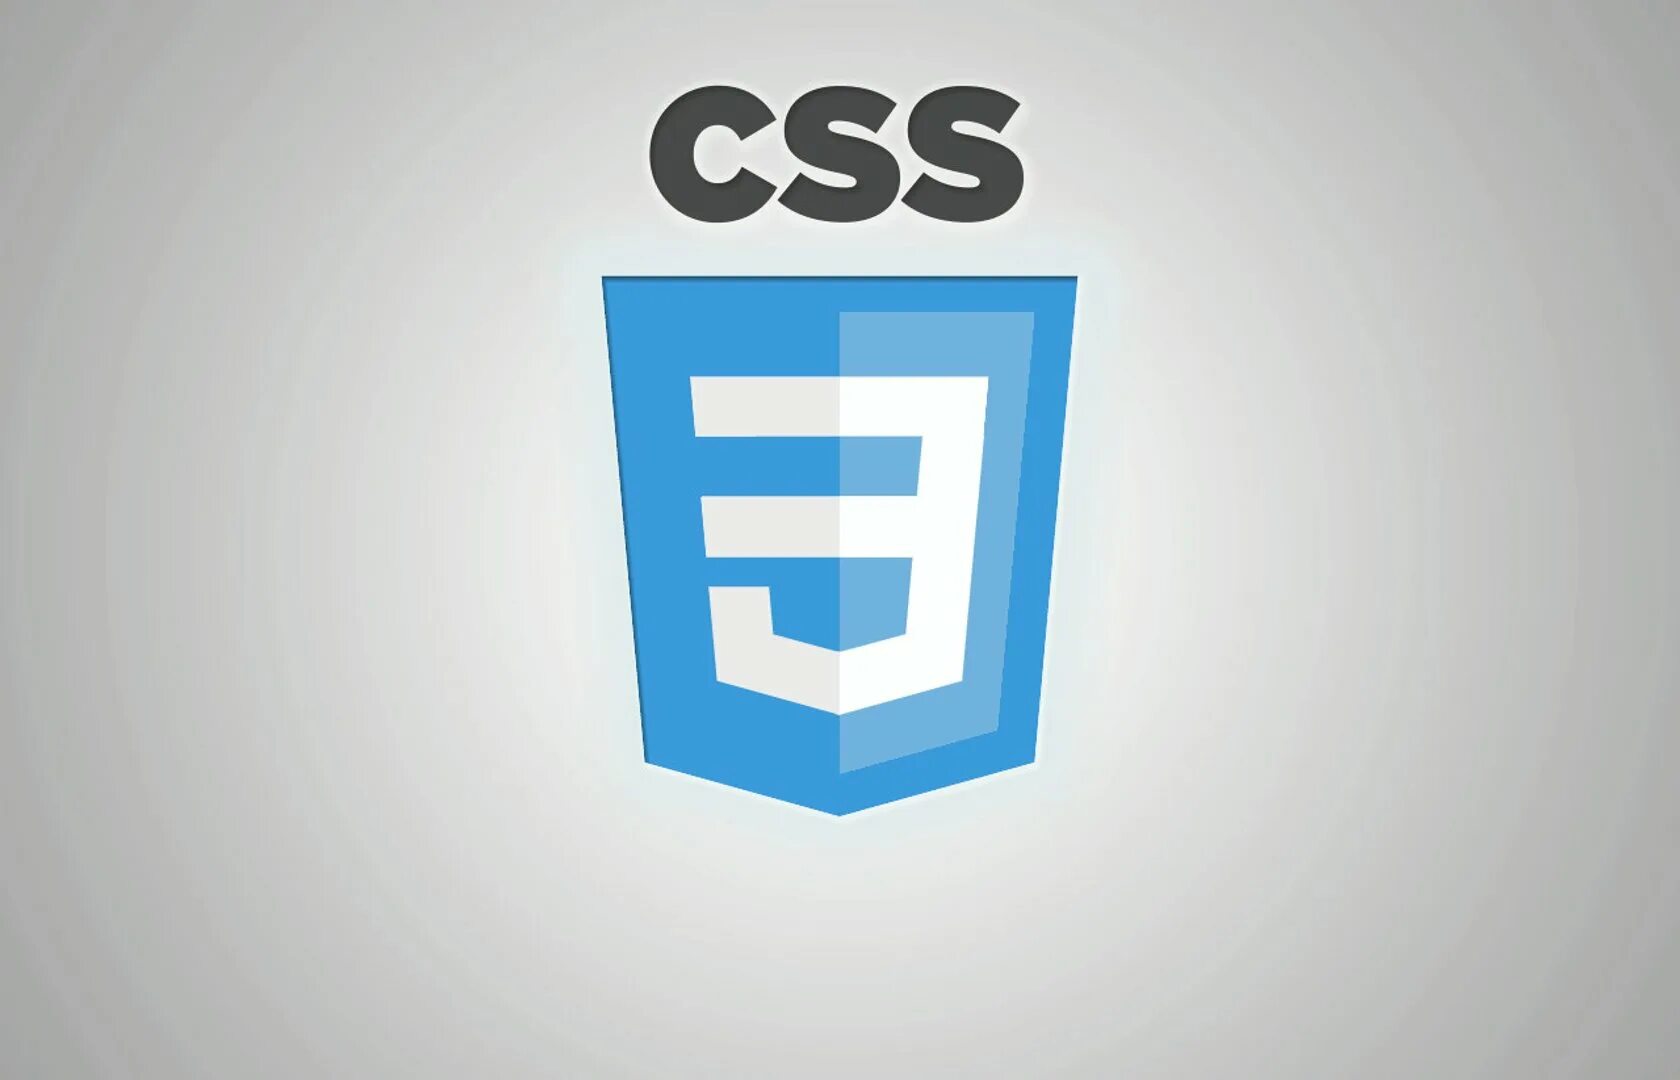 Html5 streaming. Css3 логотип. Значок css3. CSS эмблема. CSS лого.